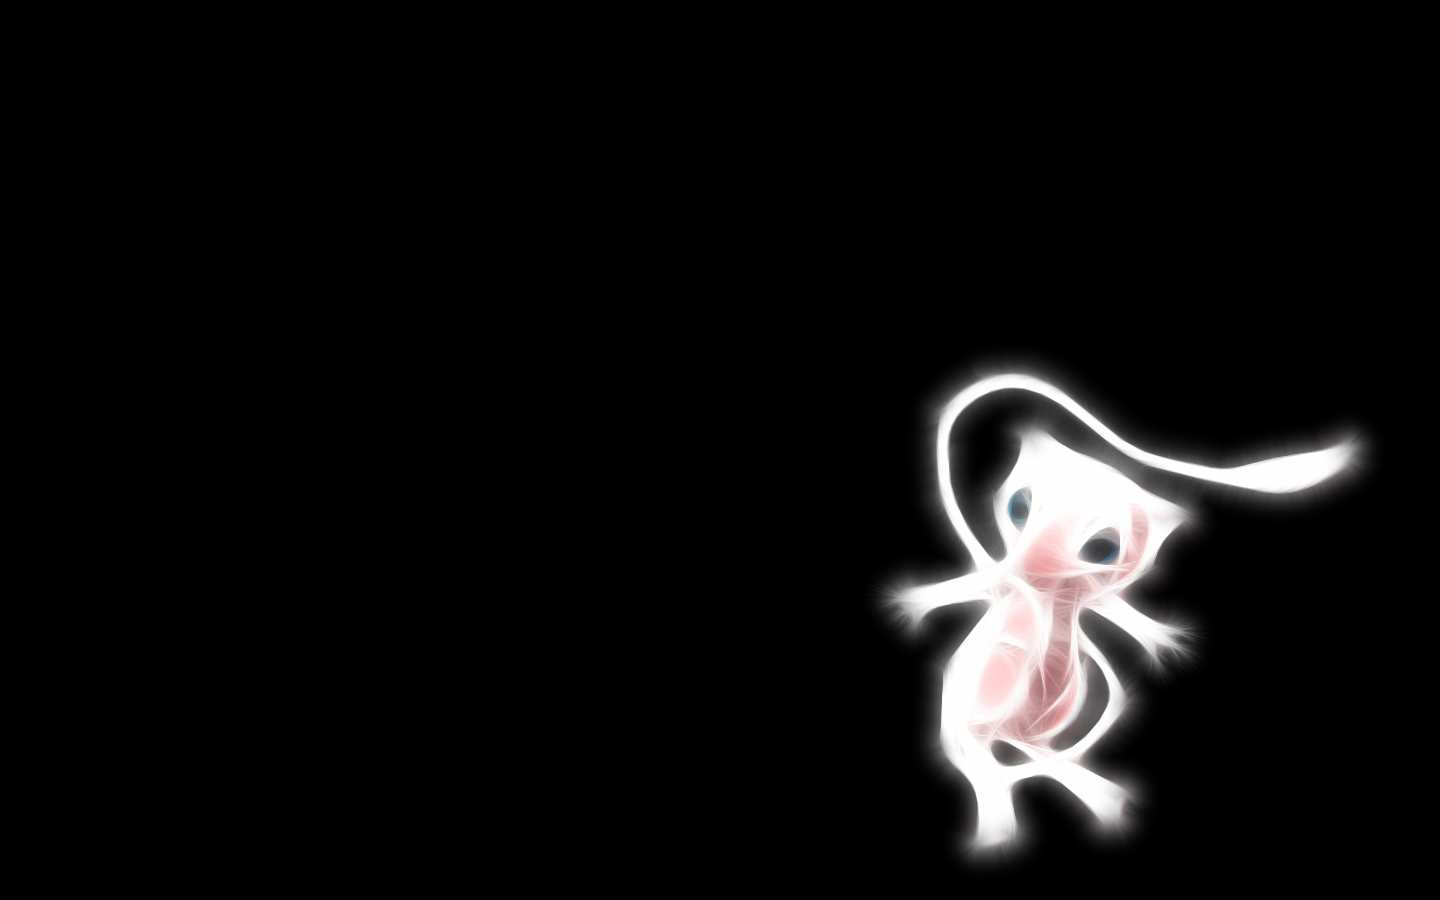 Mew Pokemon Image Wallpaper HD And